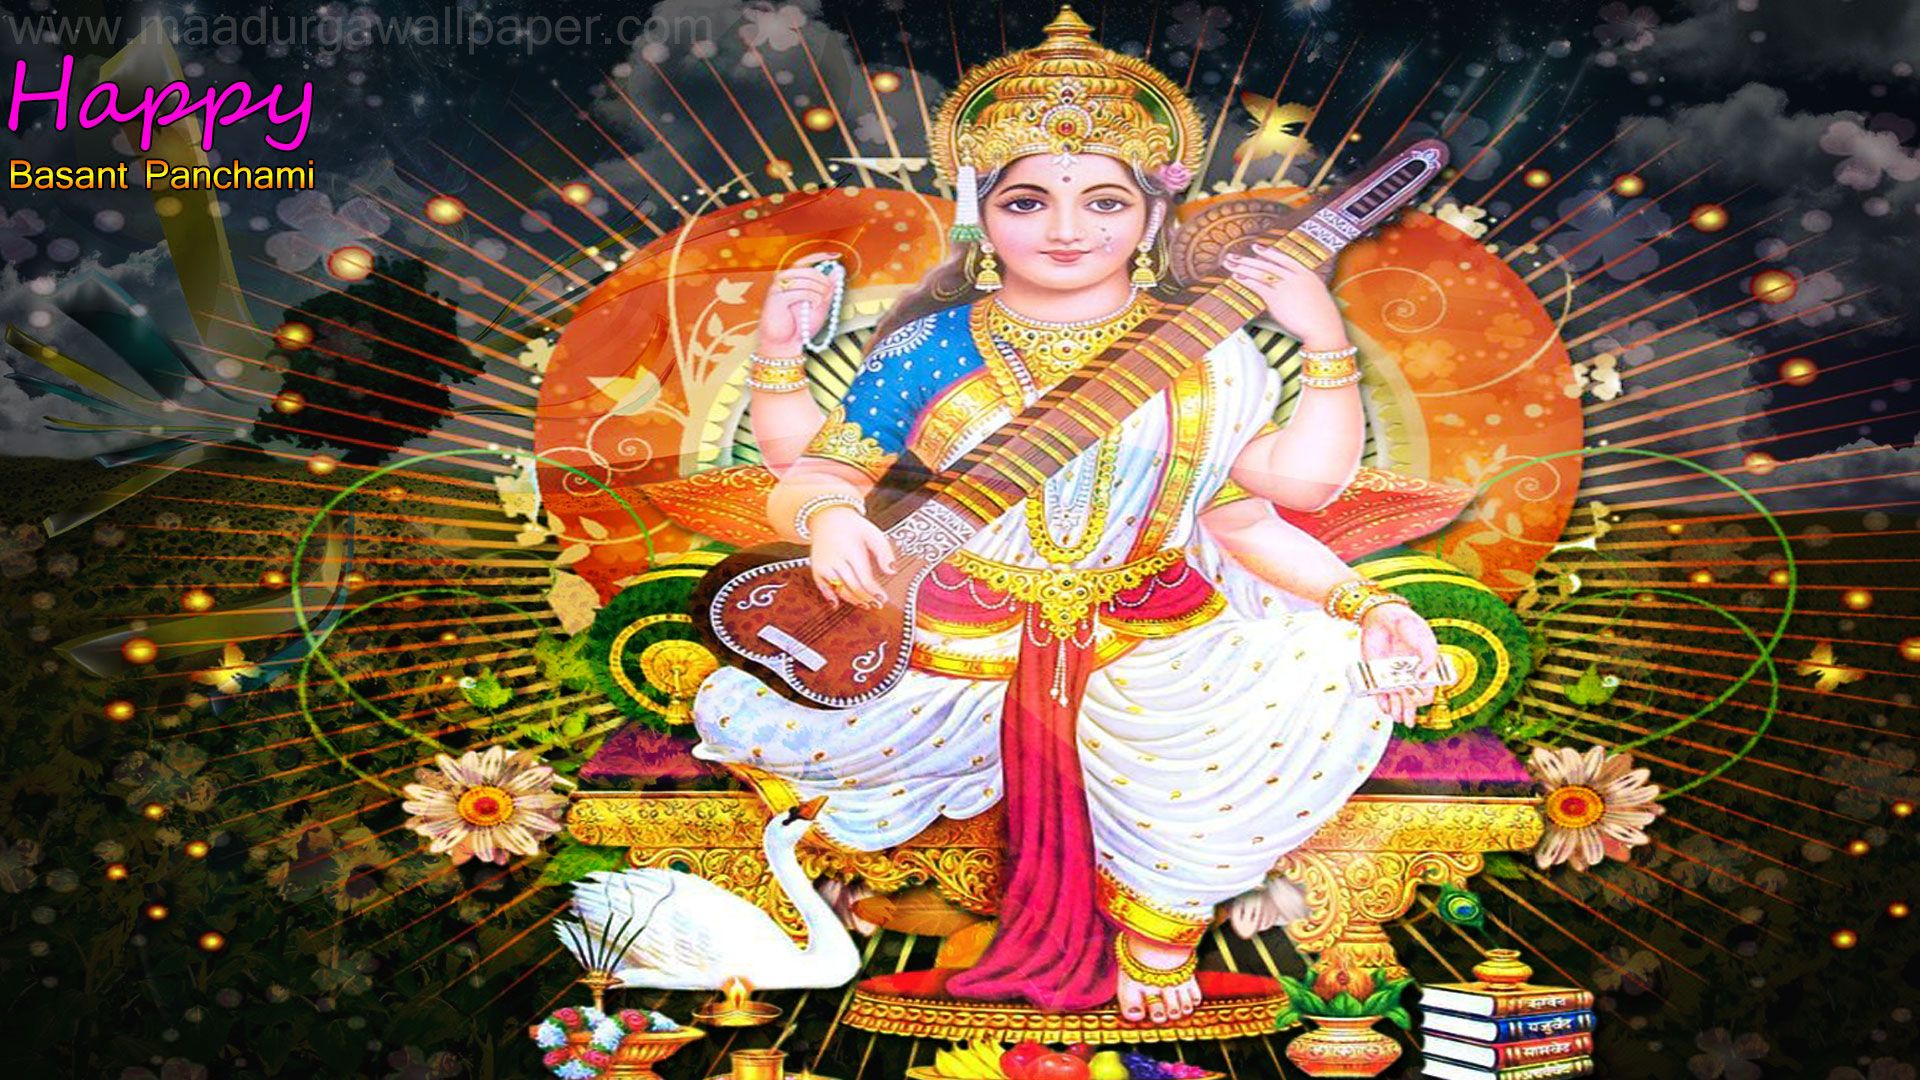 Goddess Saraswati pics & wallpaper download